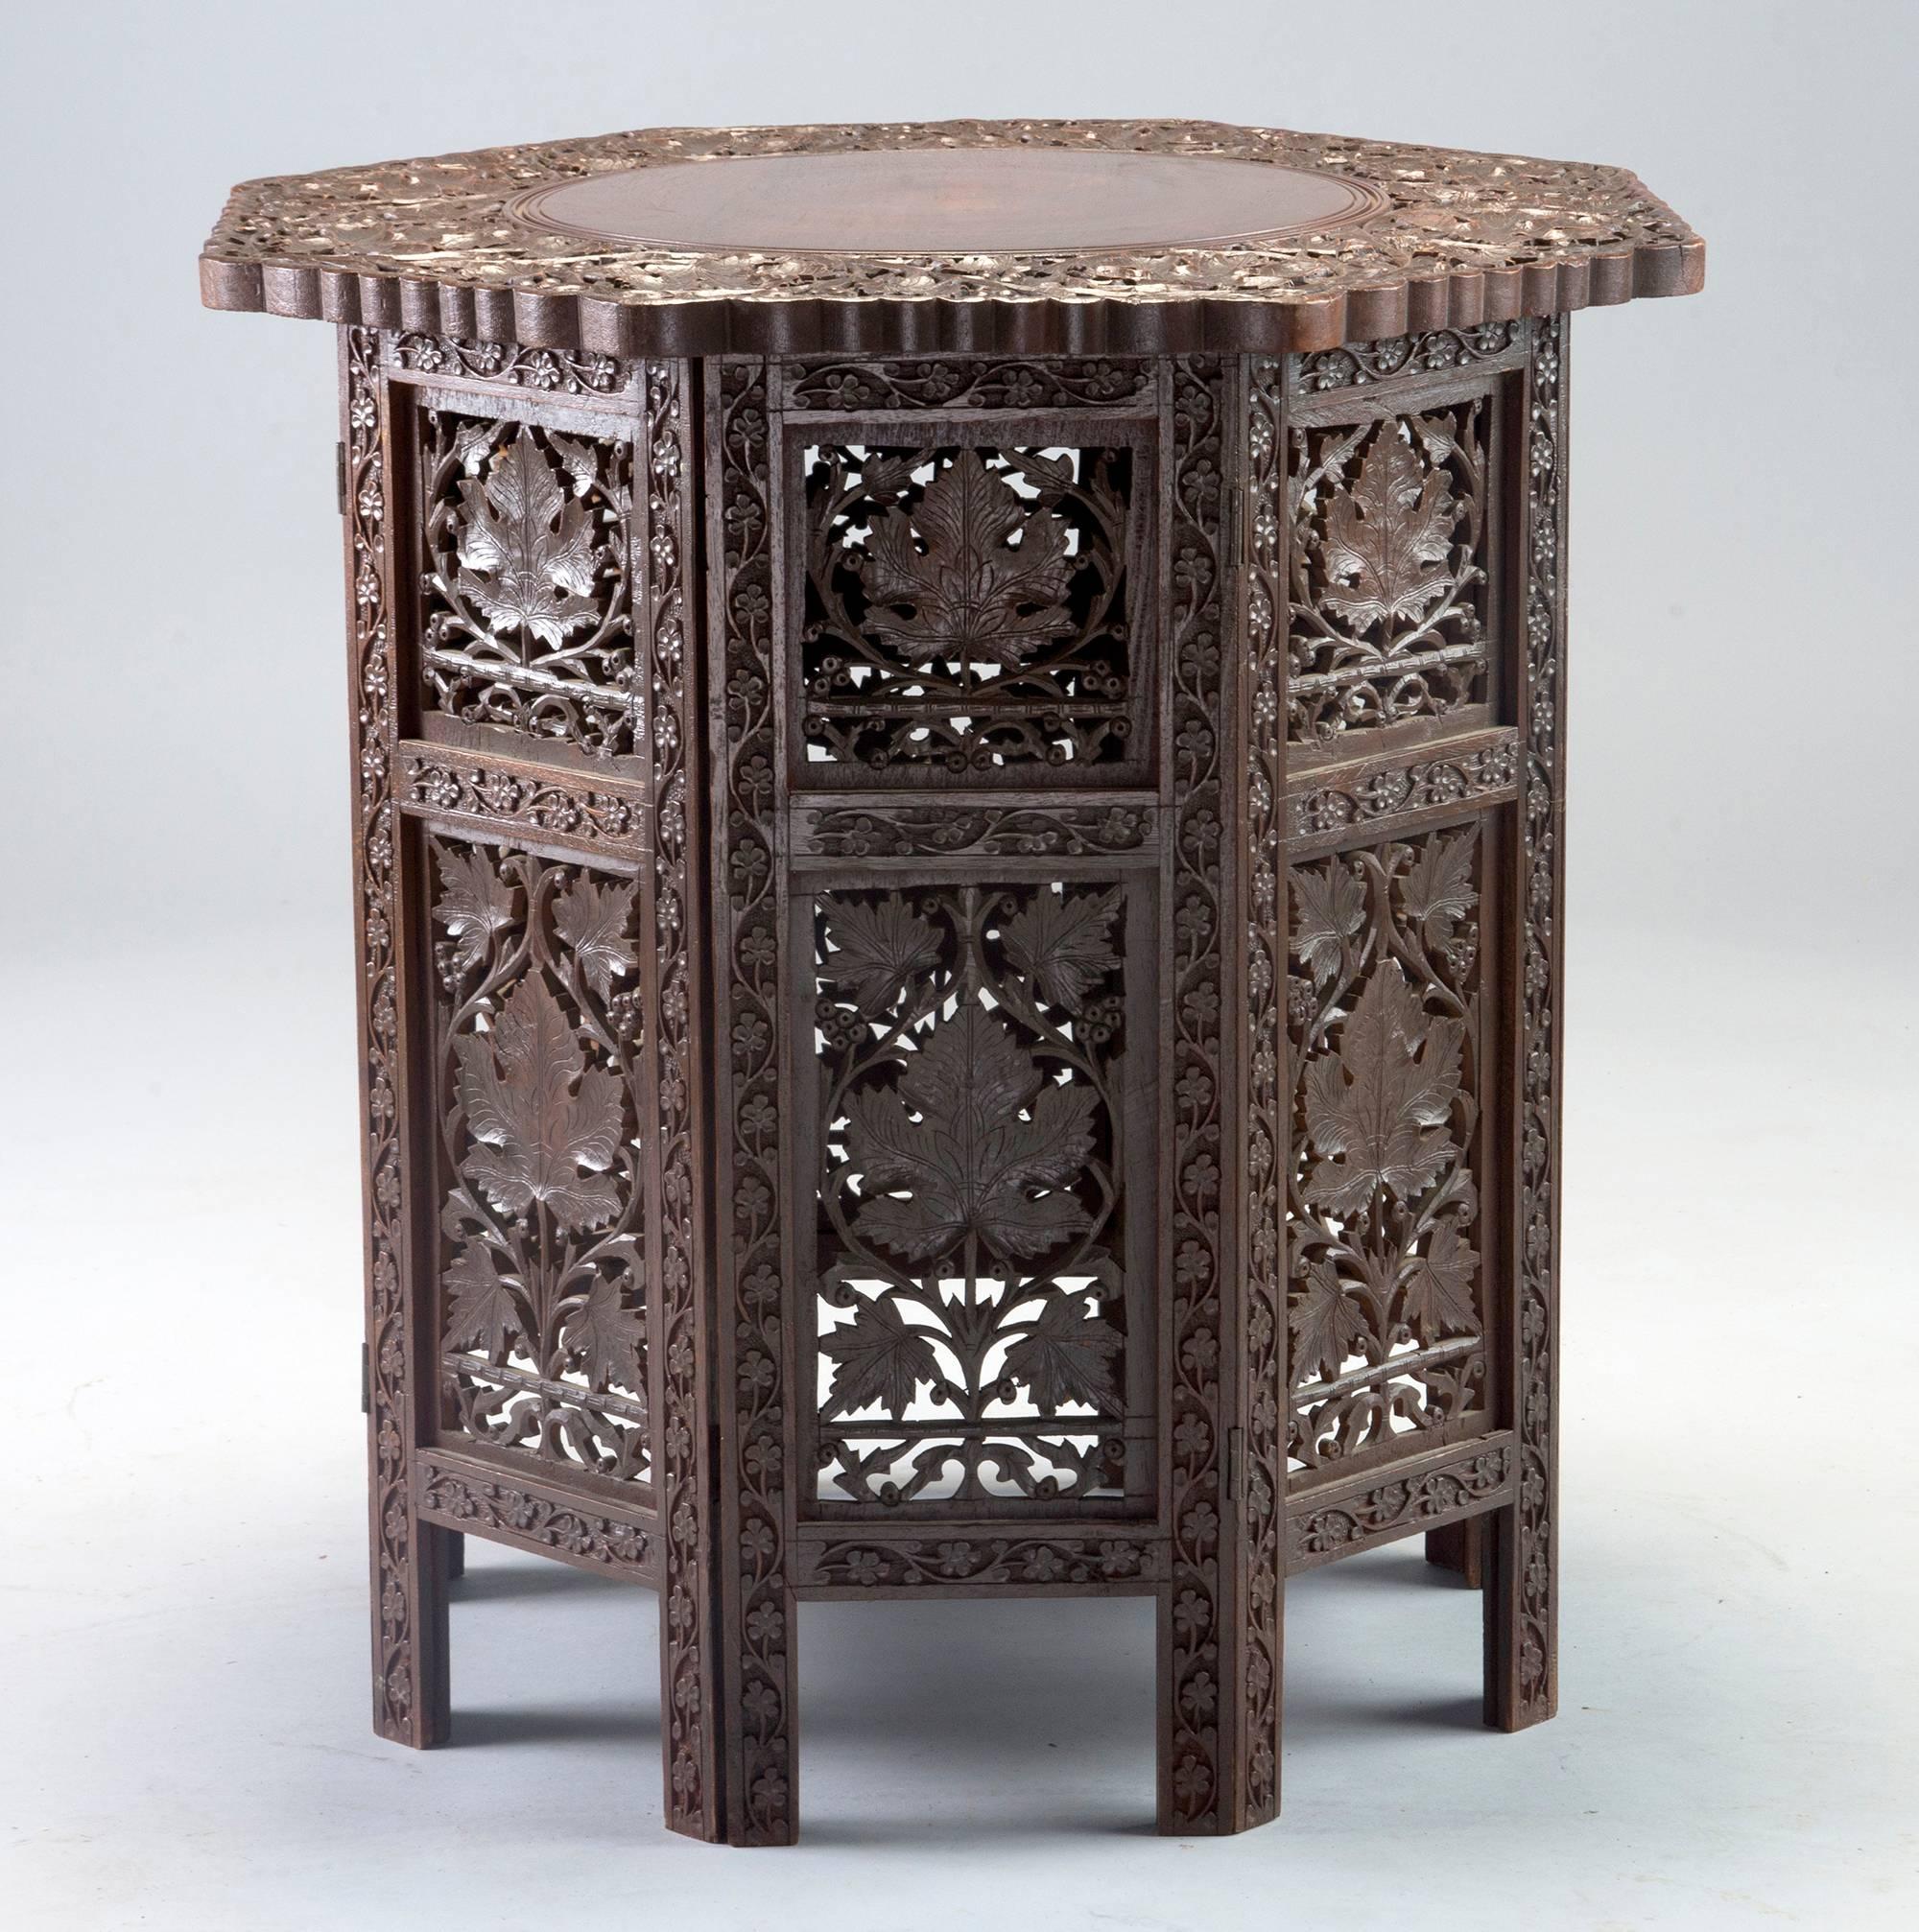 20th Century Carved Teak Moorish Table with Grape Leaf Design